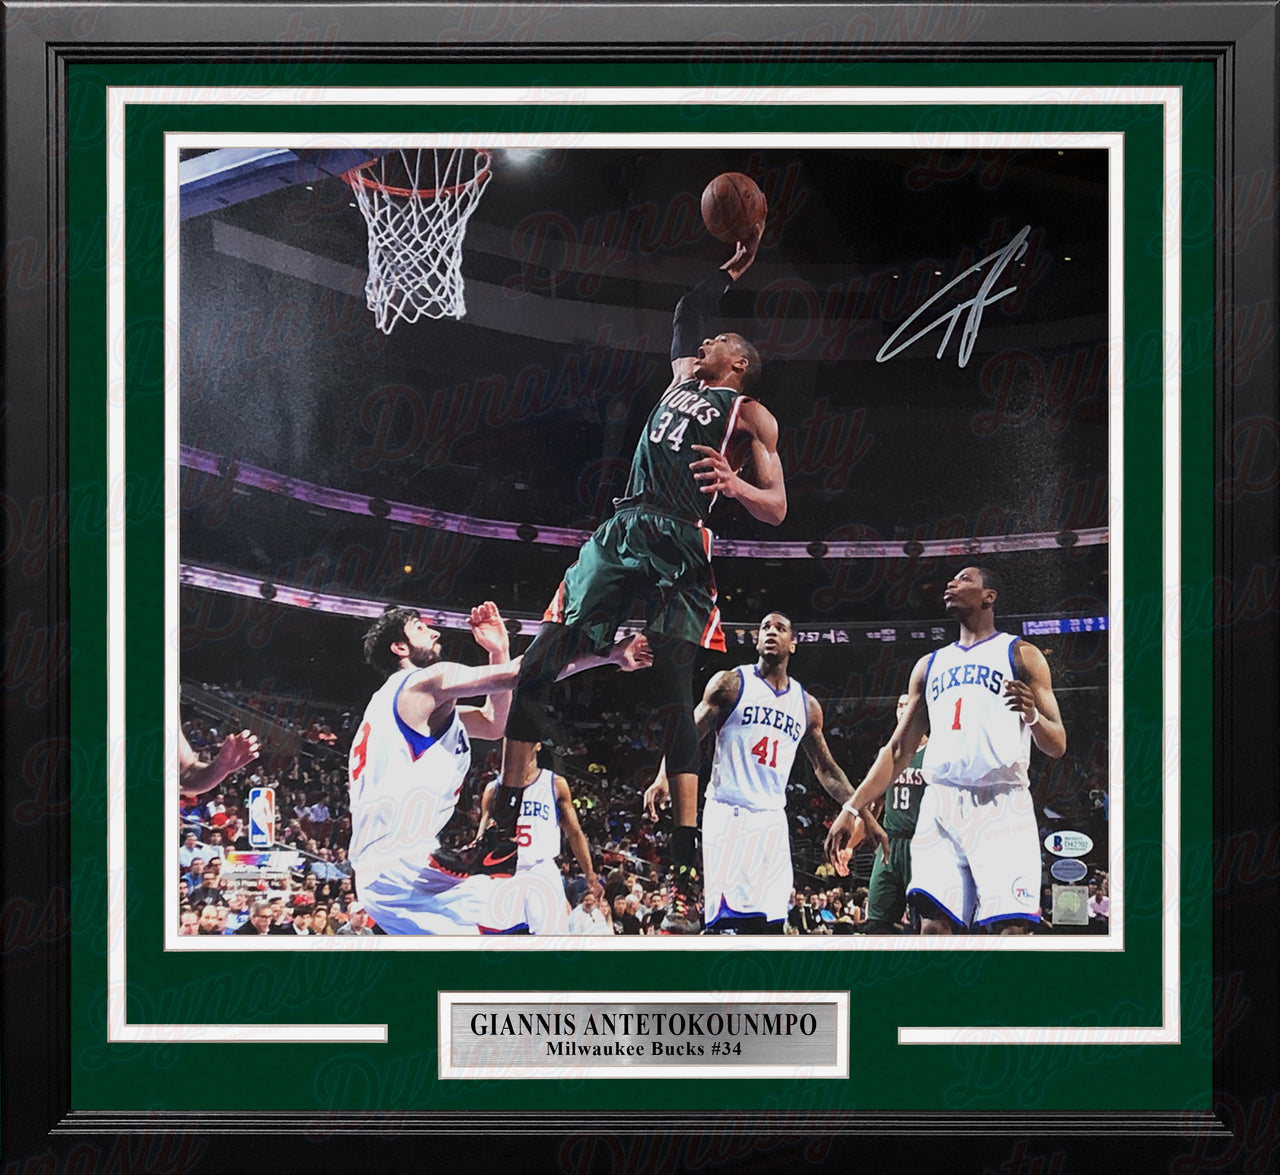 Giannis Antetokounmpo Slam Dunk v. 76ers Milwaukee Bucks Autographed 16x20 Framed Basketball Photo - Dynasty Sports & Framing 